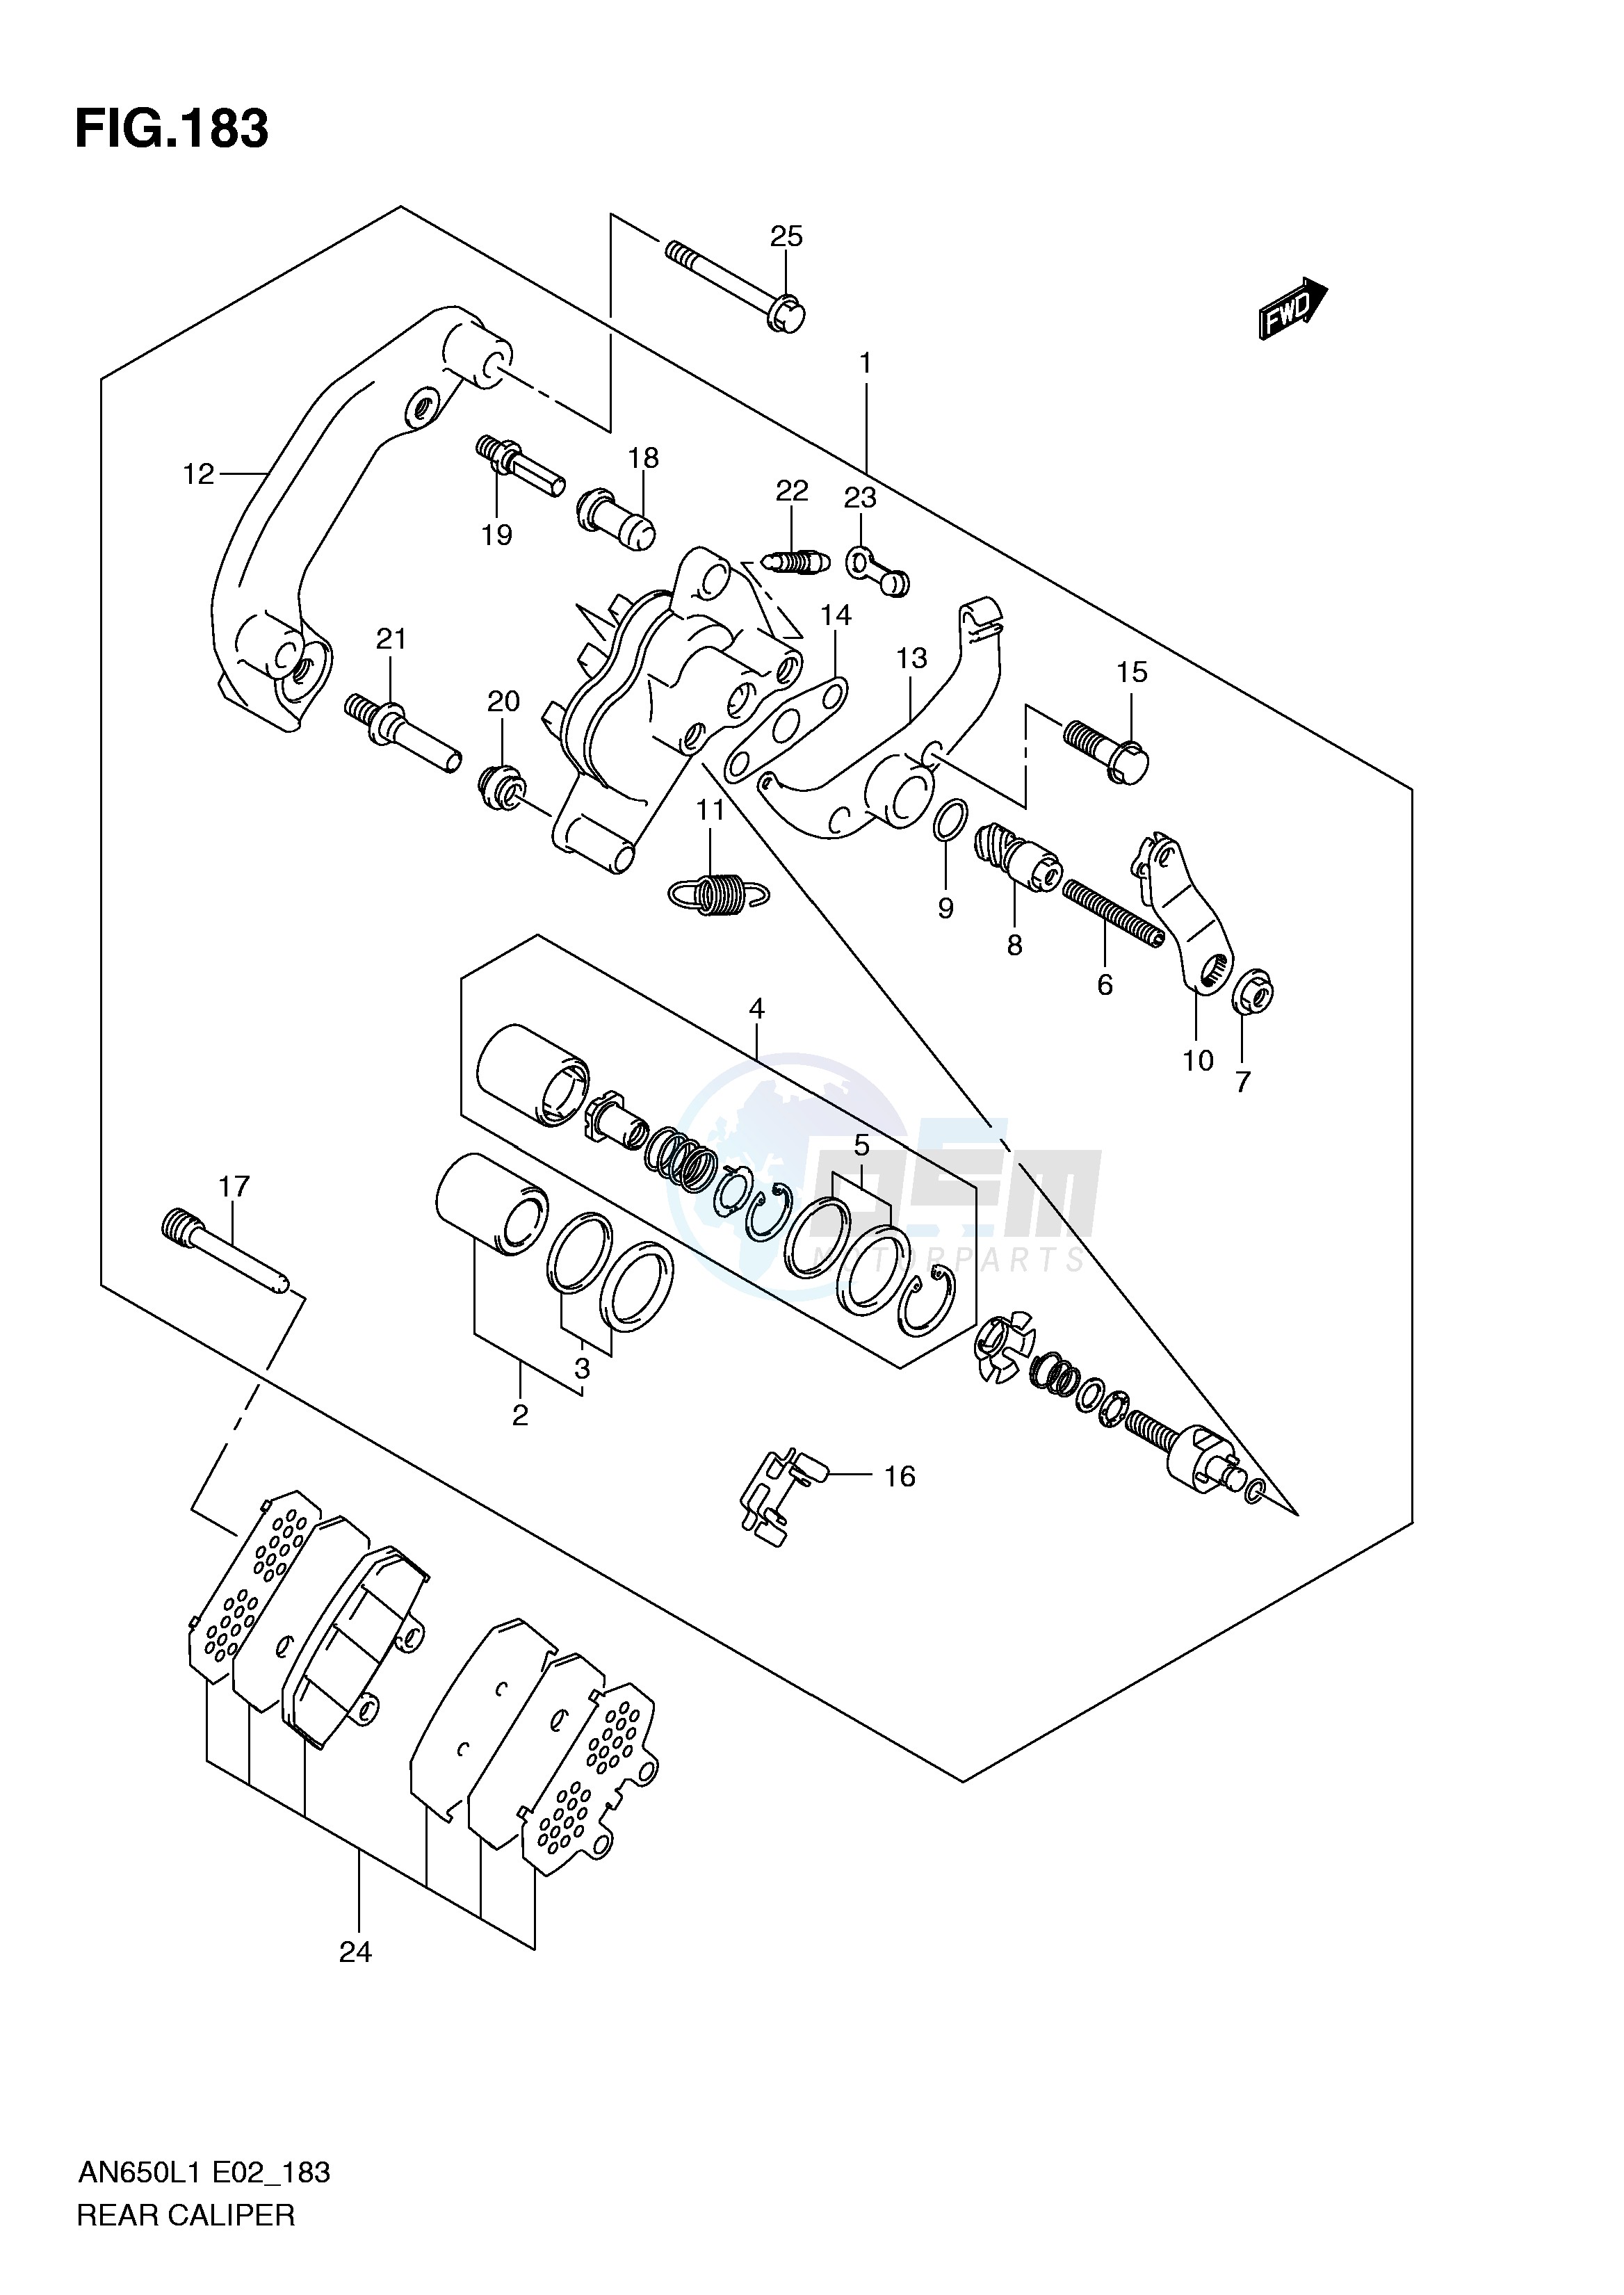 REAR CALIPER (AN650L1 E19) blueprint